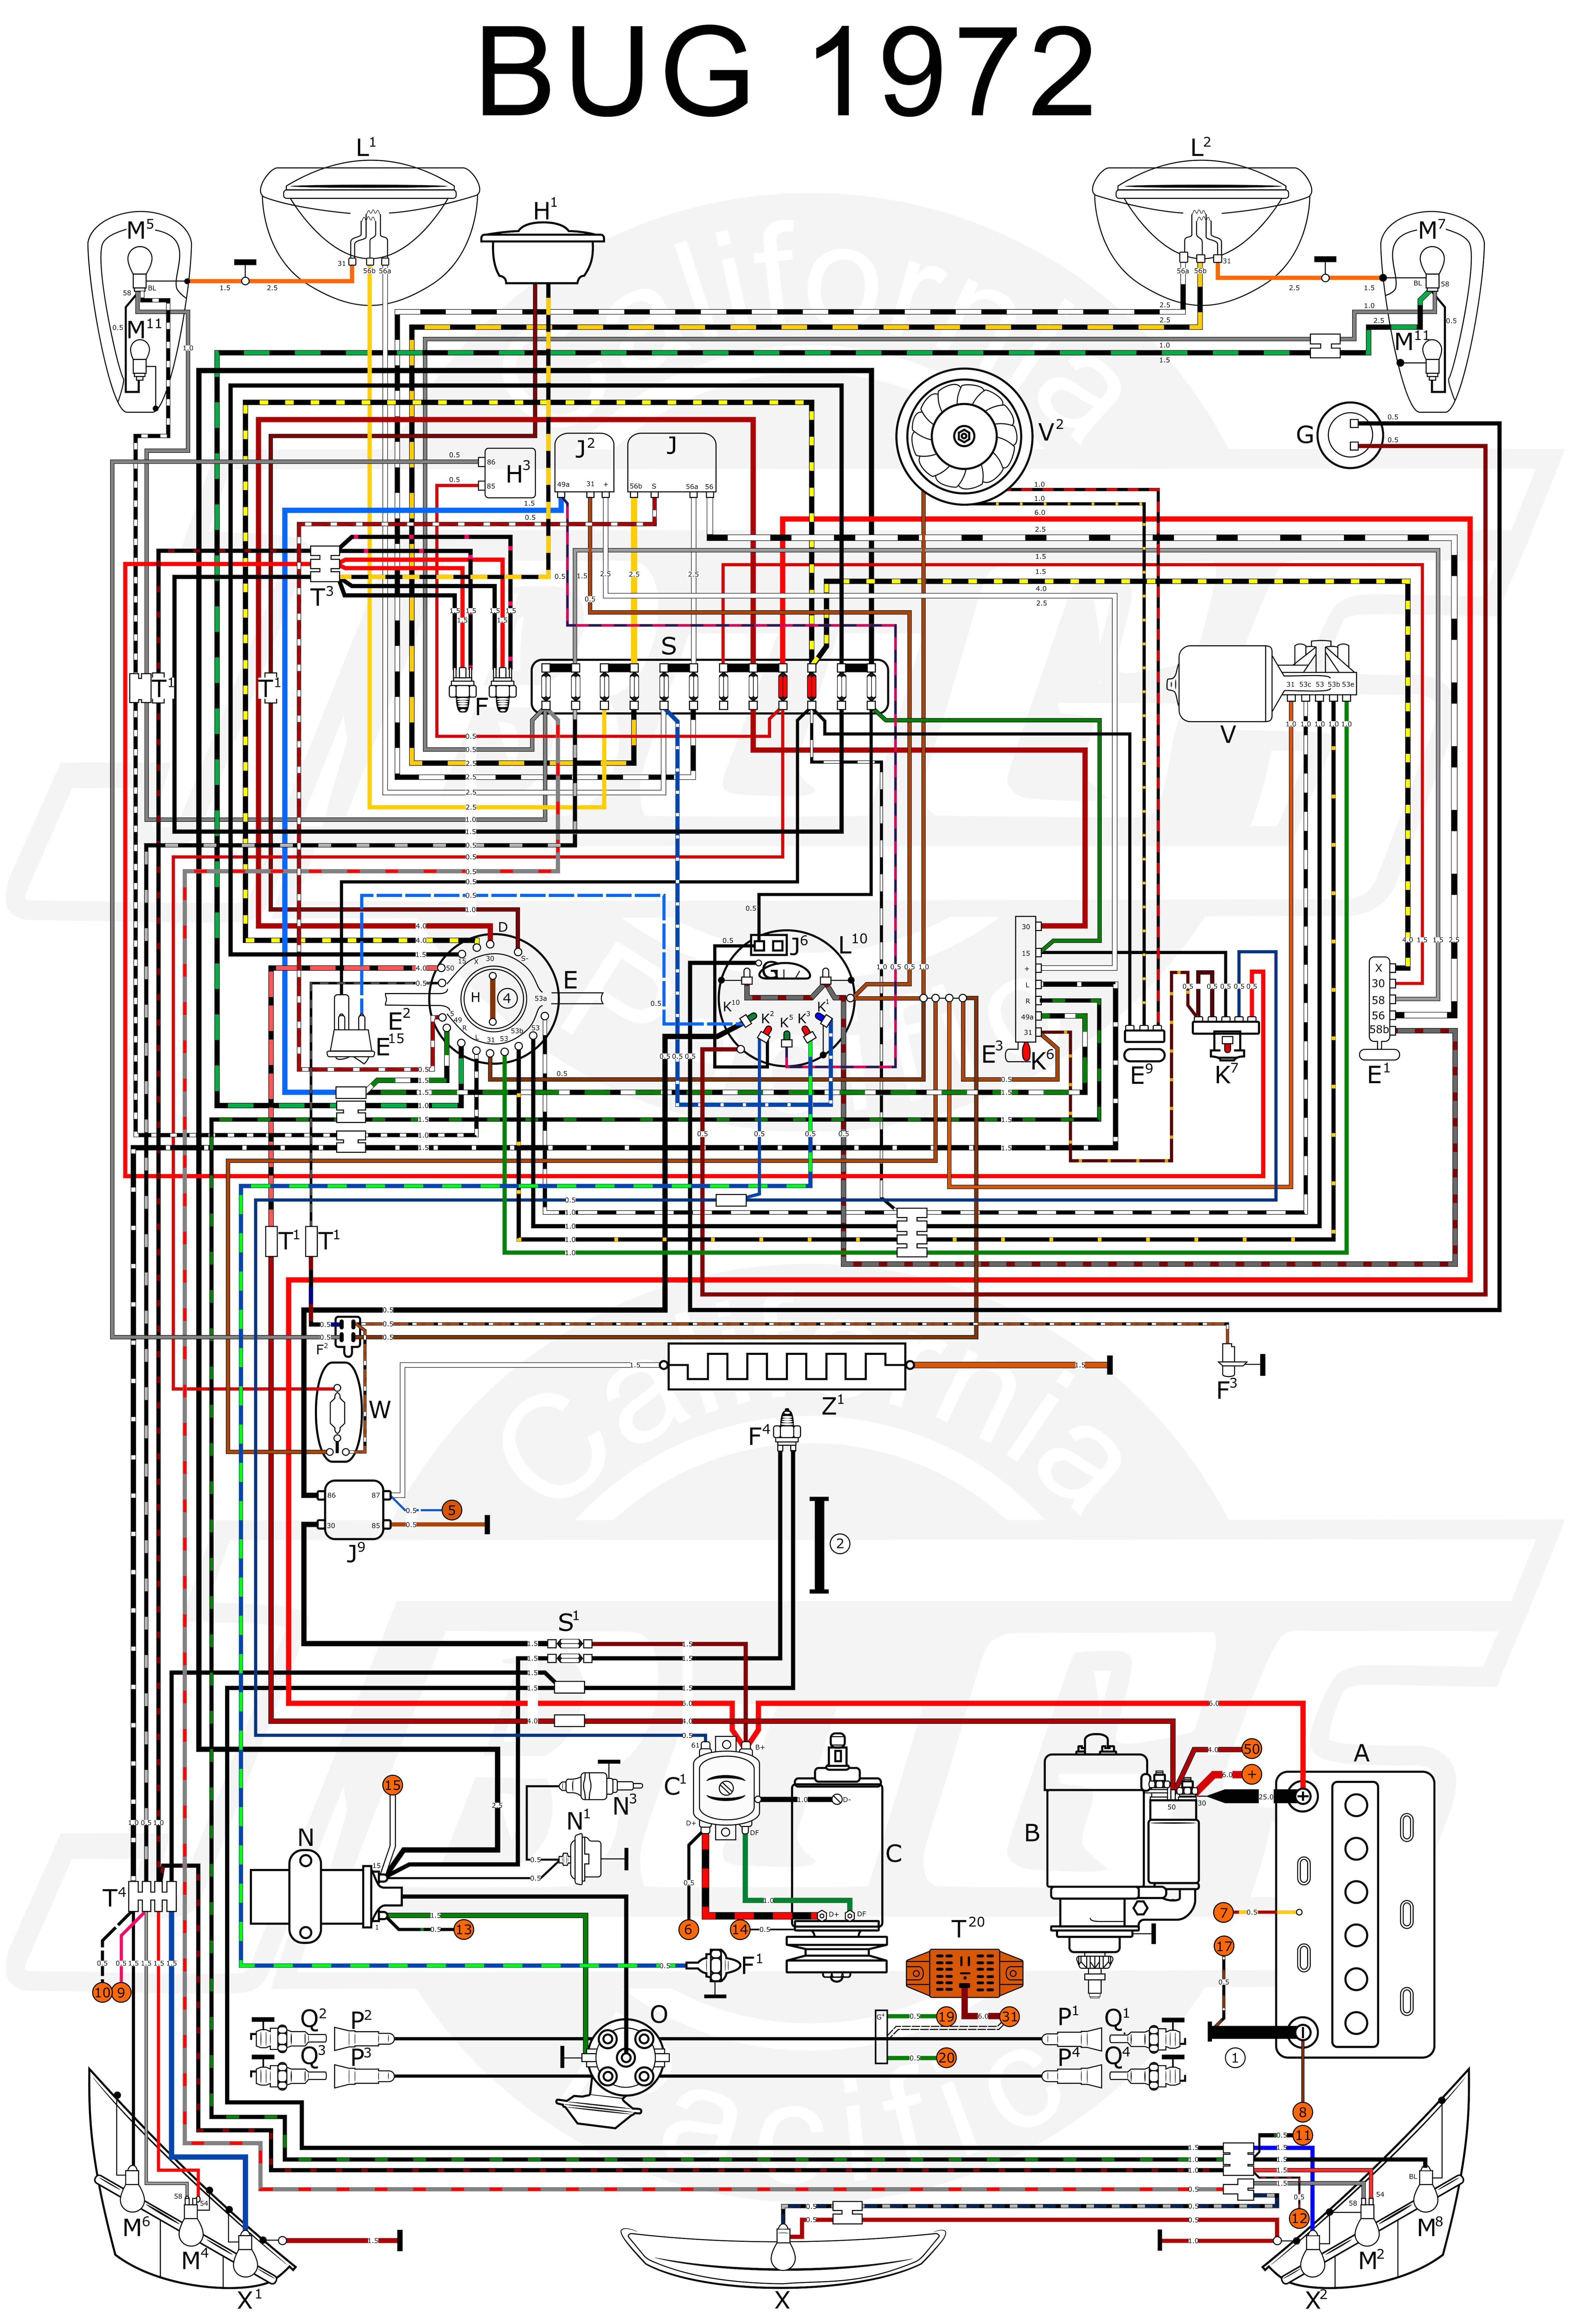 1973 vw wiring harness blog wiring diagram wiring diagrams 1973 beetle